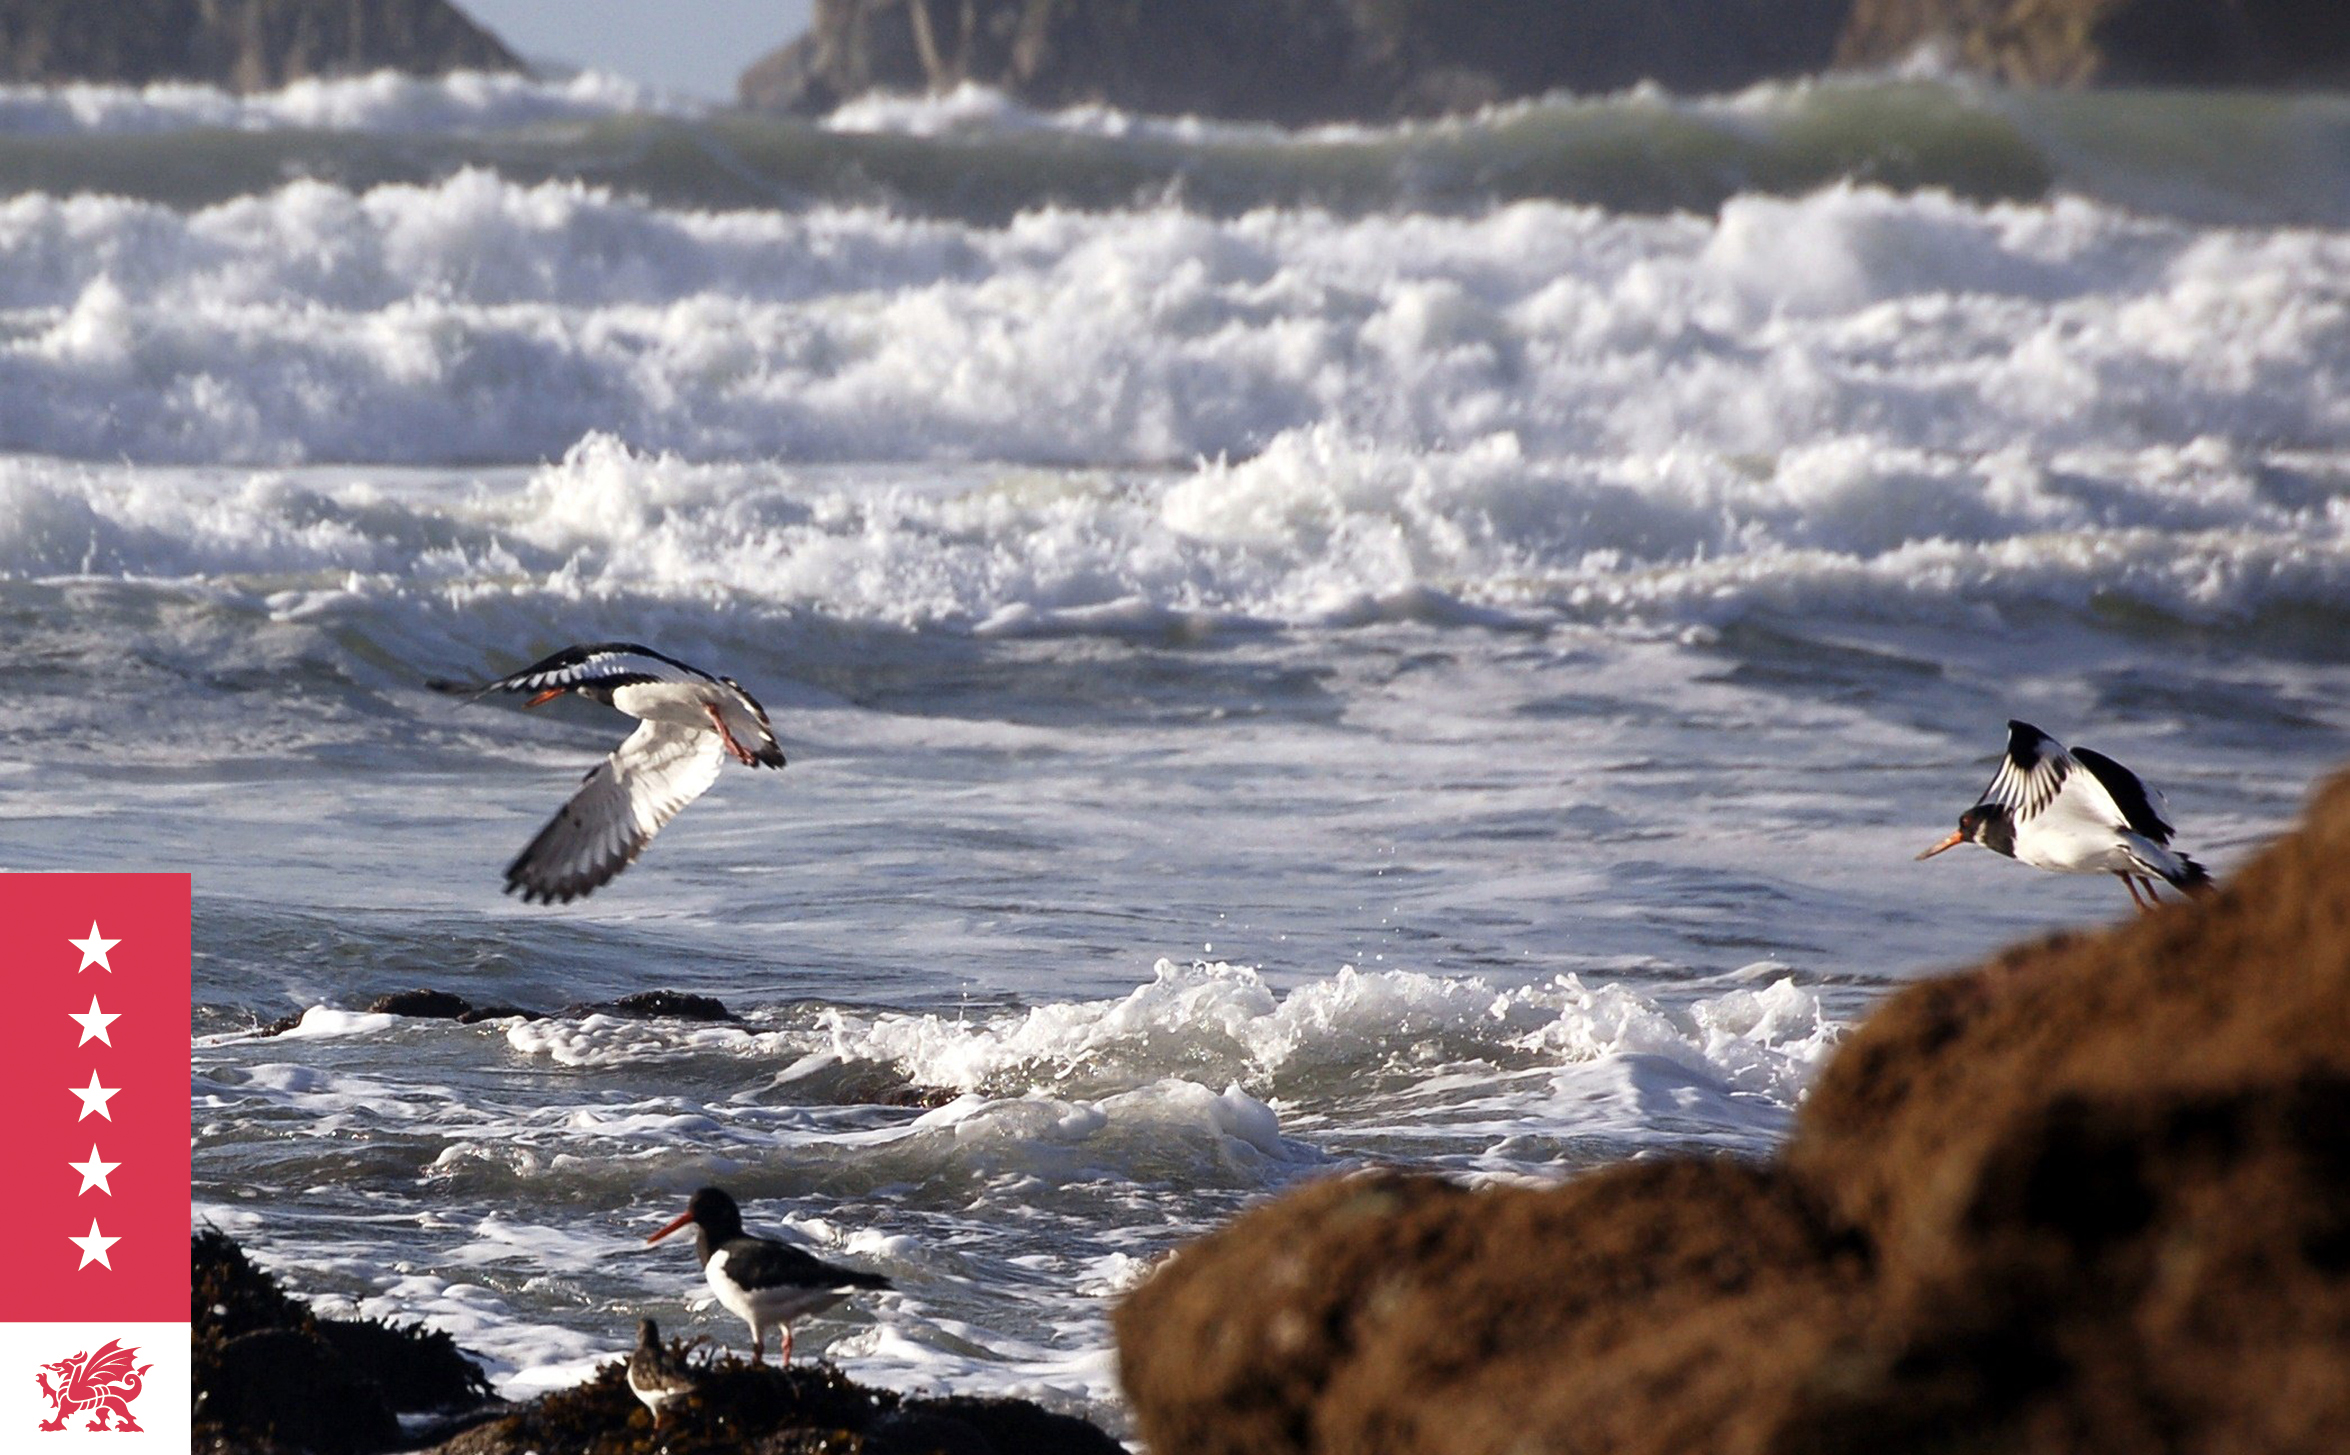 Seabirds take flight